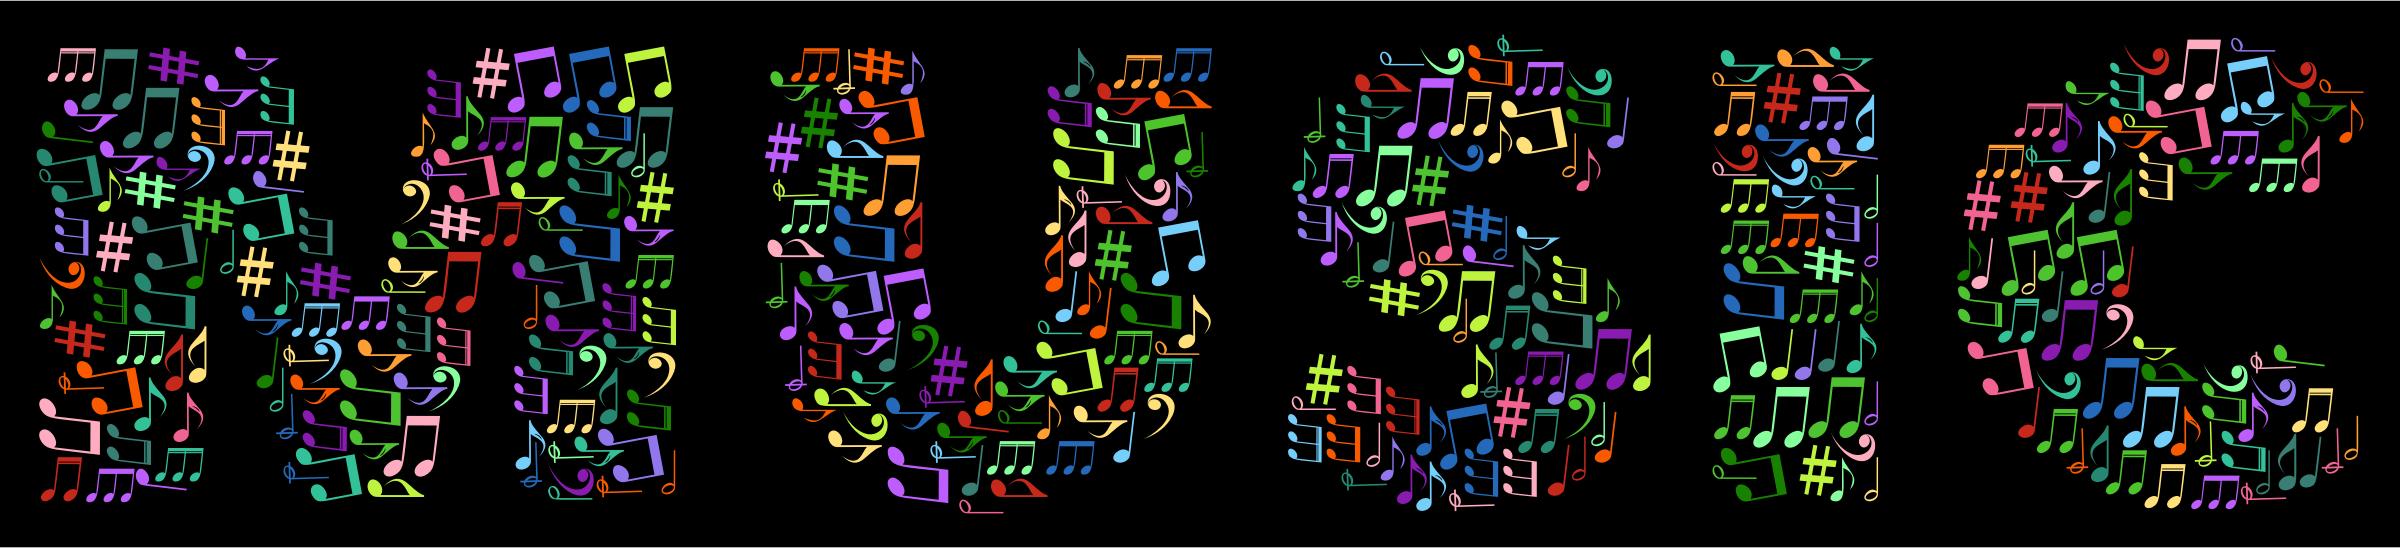 Music Typography icons